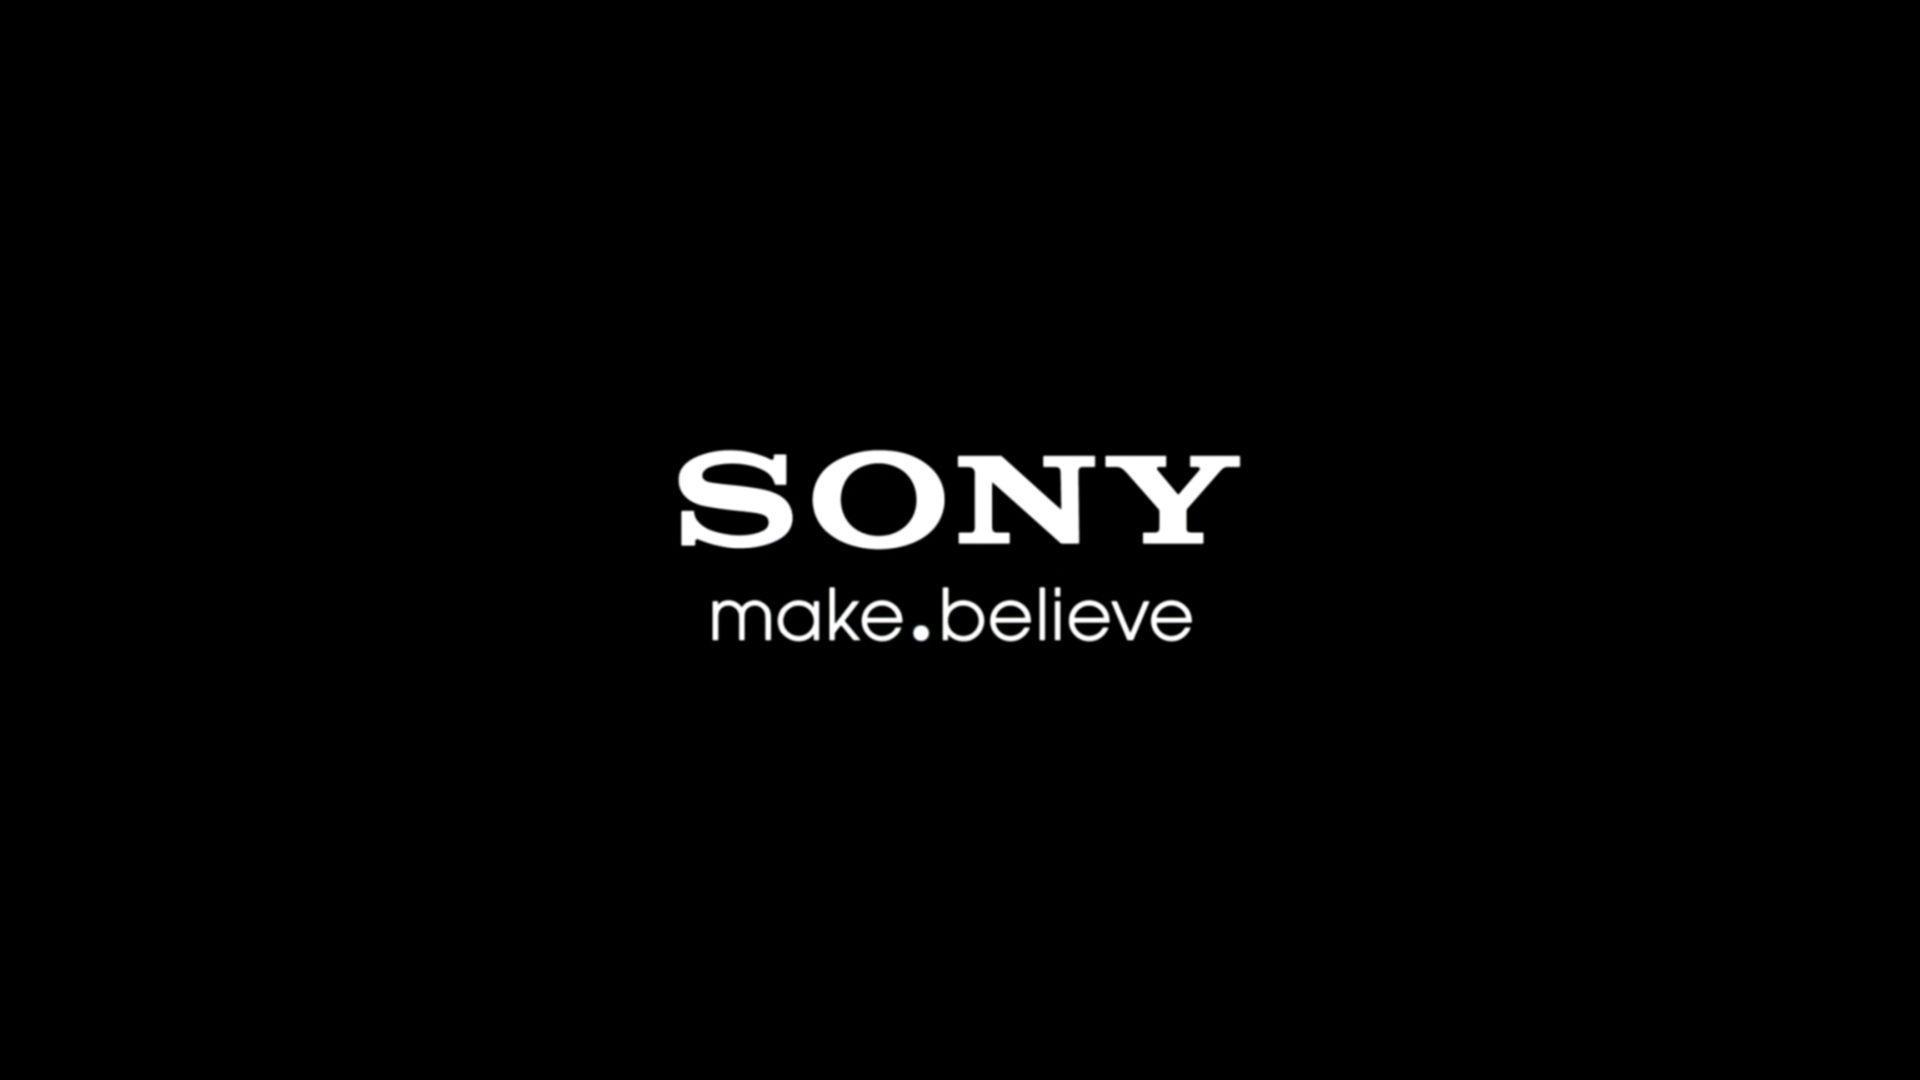 Sony Logo Desktop Wallpaper 49007 1920x1080 px